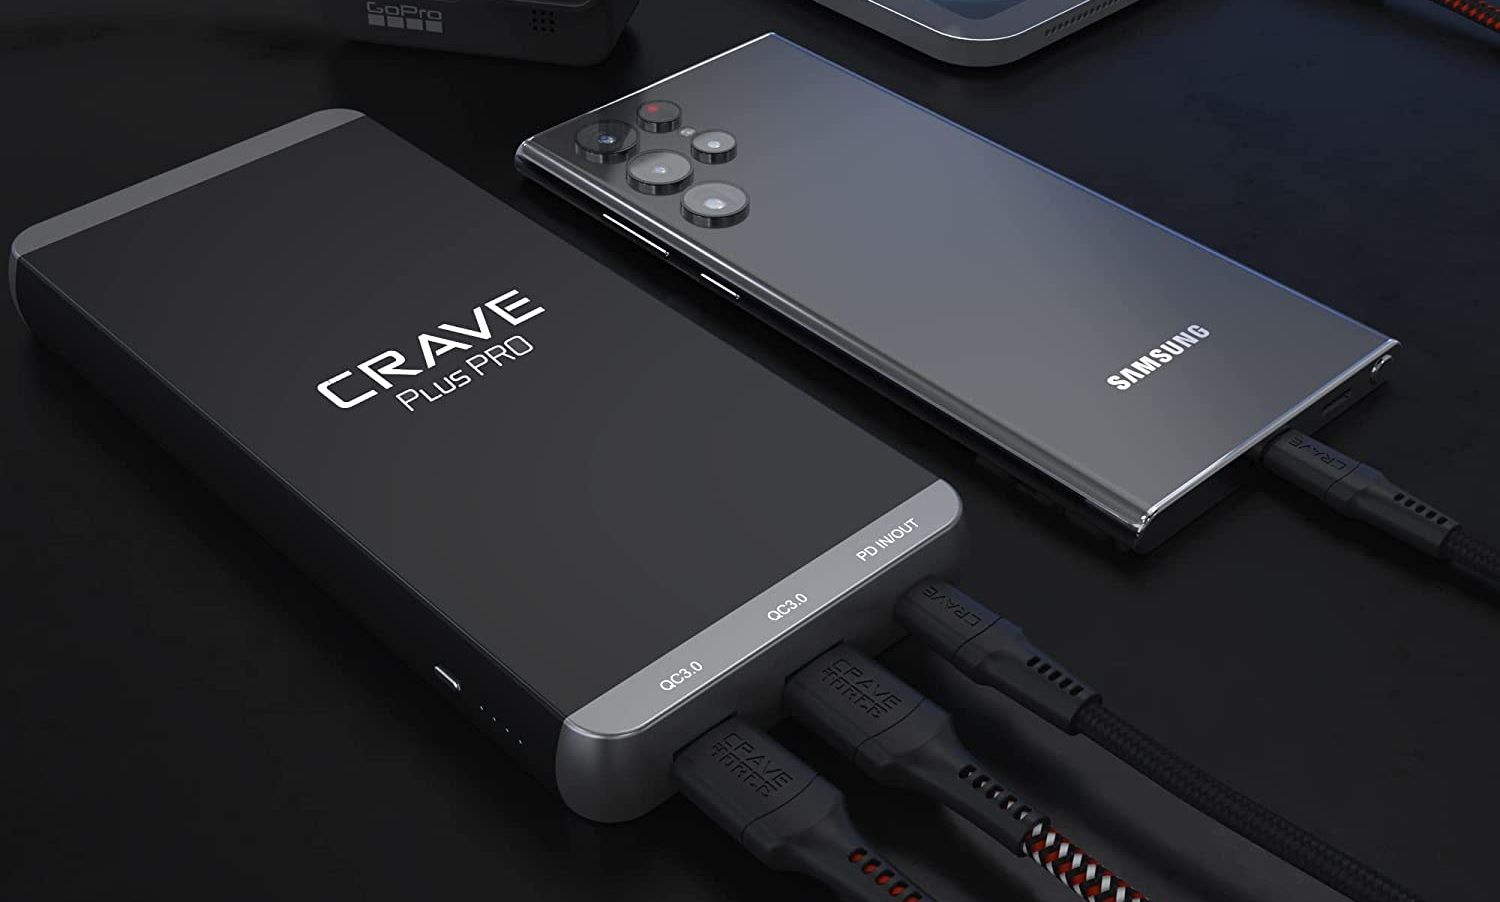 crave plus pro alongside a samsung smartphone